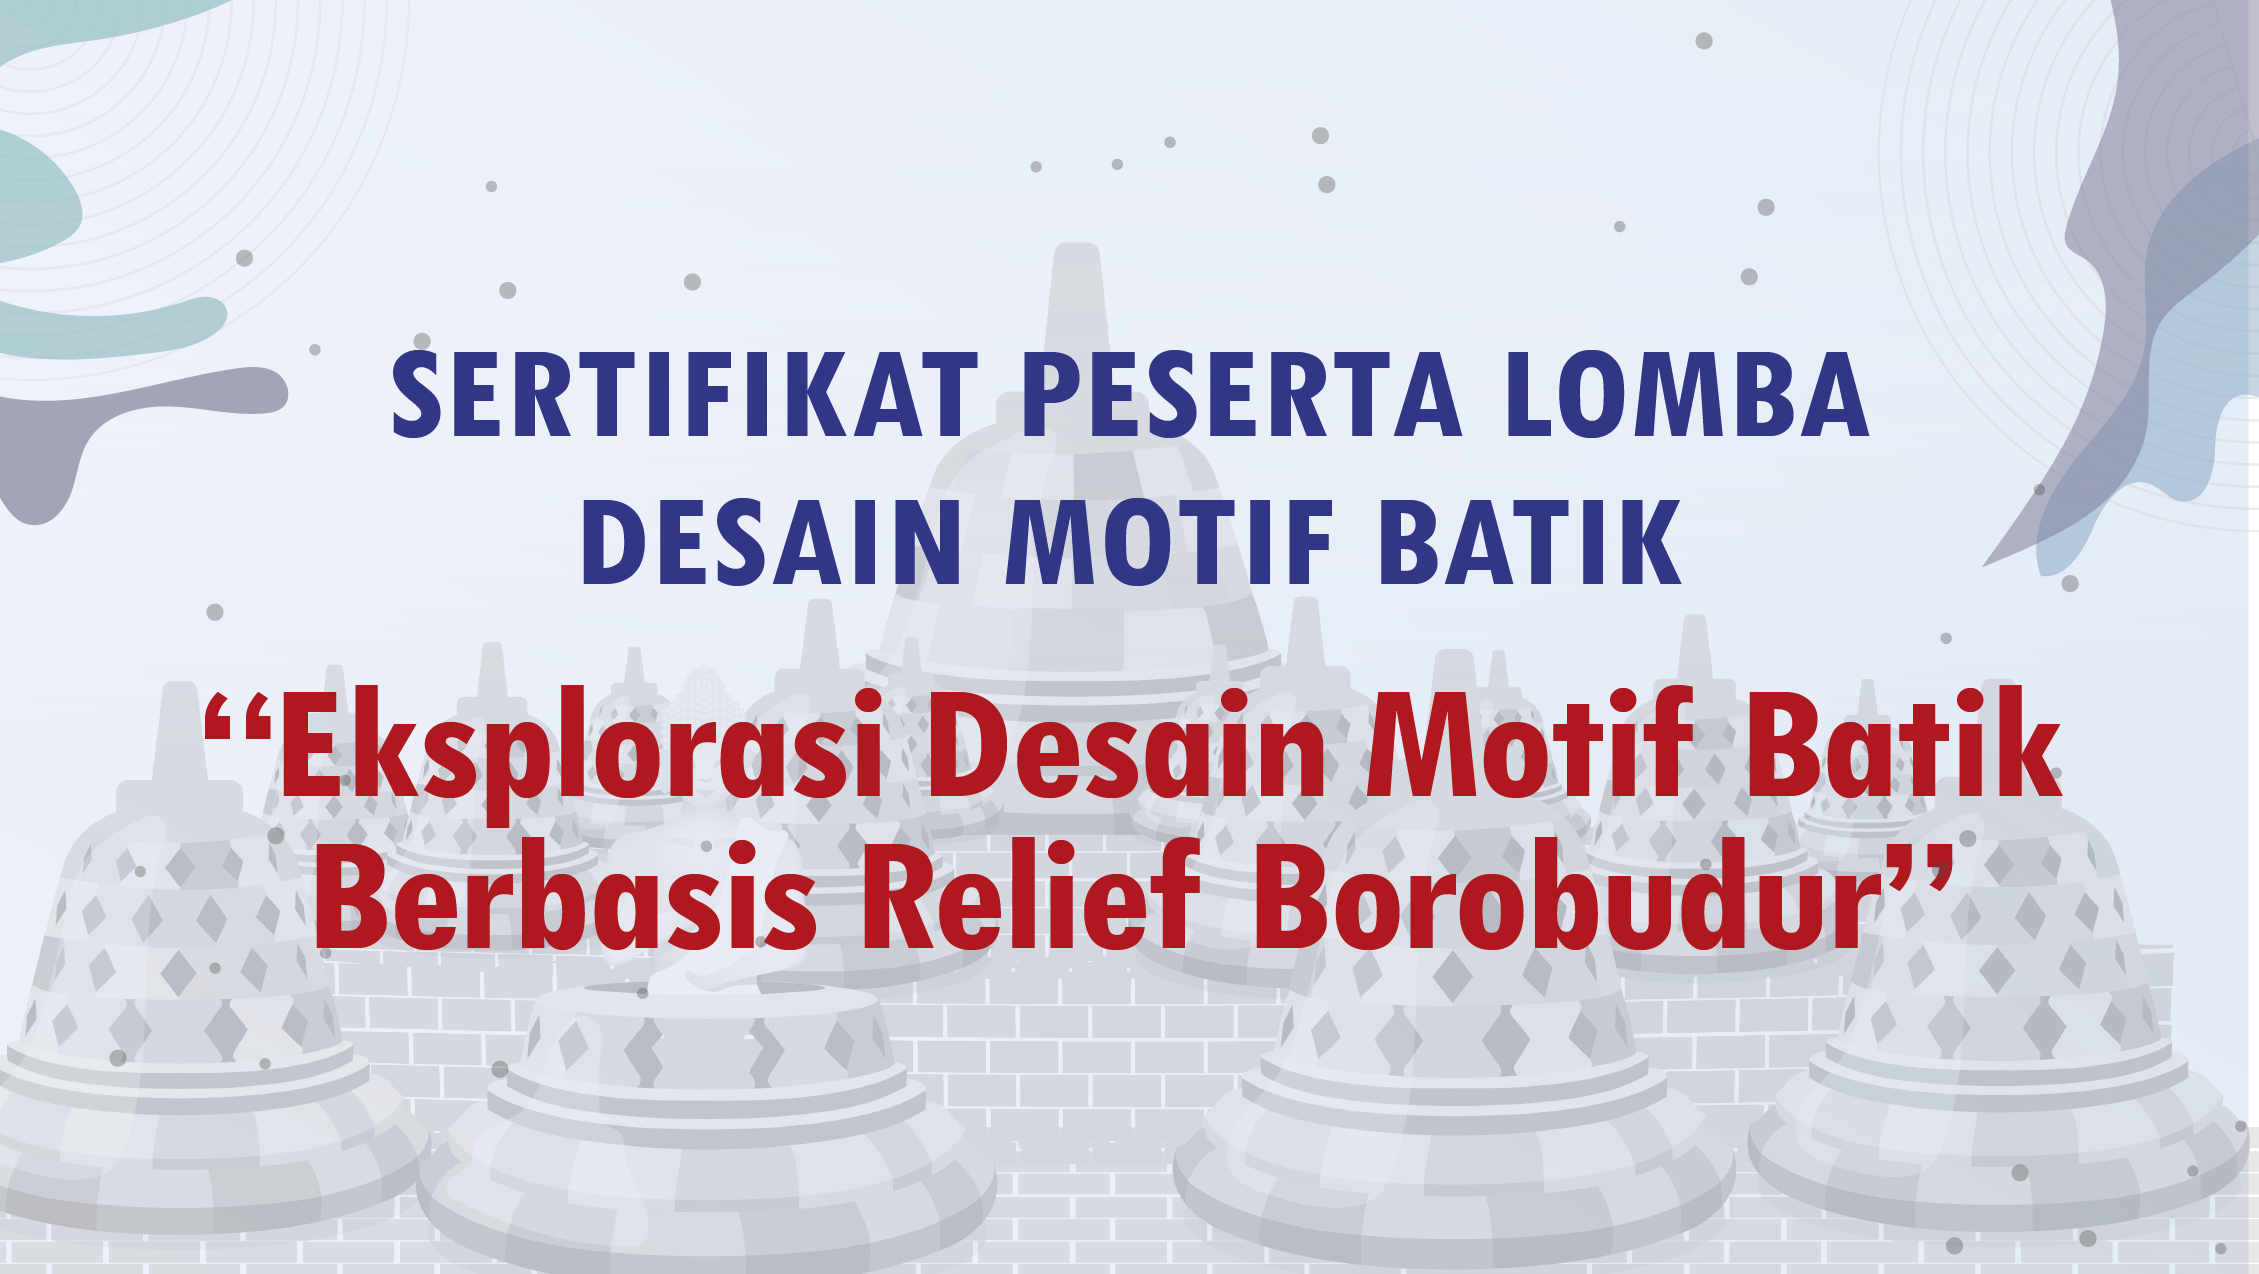 You are currently viewing Sertifikat Peserta Lomba Batik